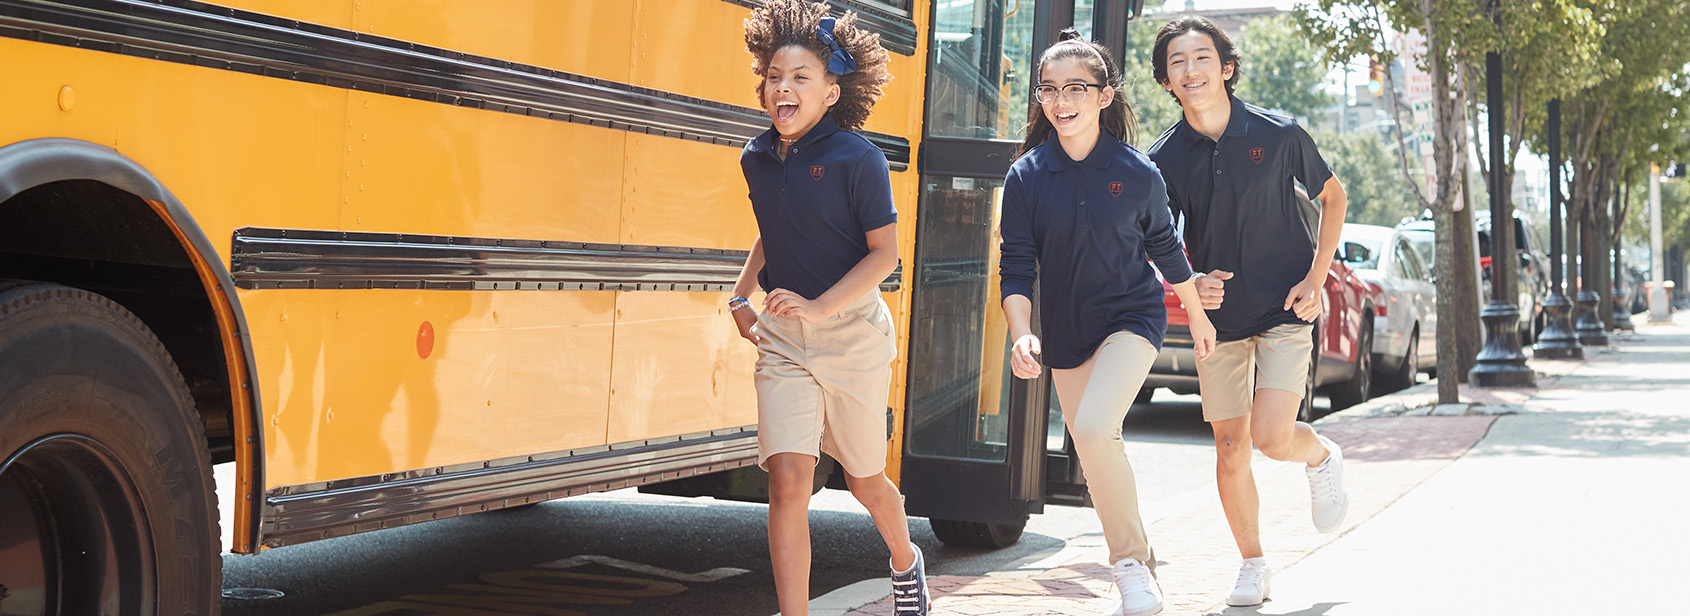 Three students running by school bus